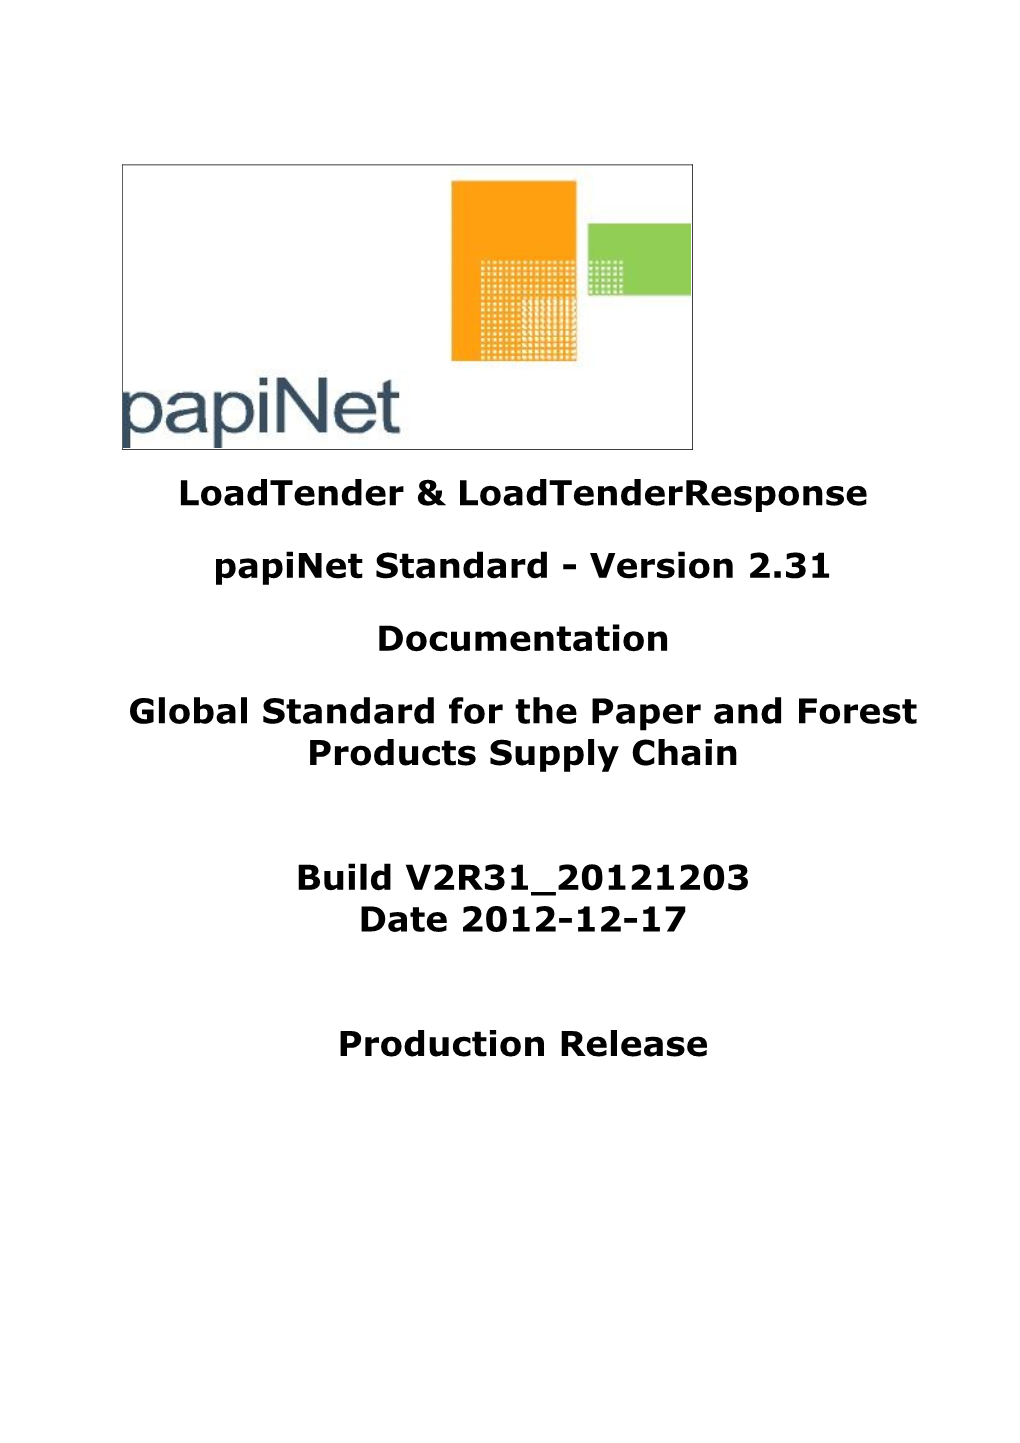 Papinet Standard - Version 2.31